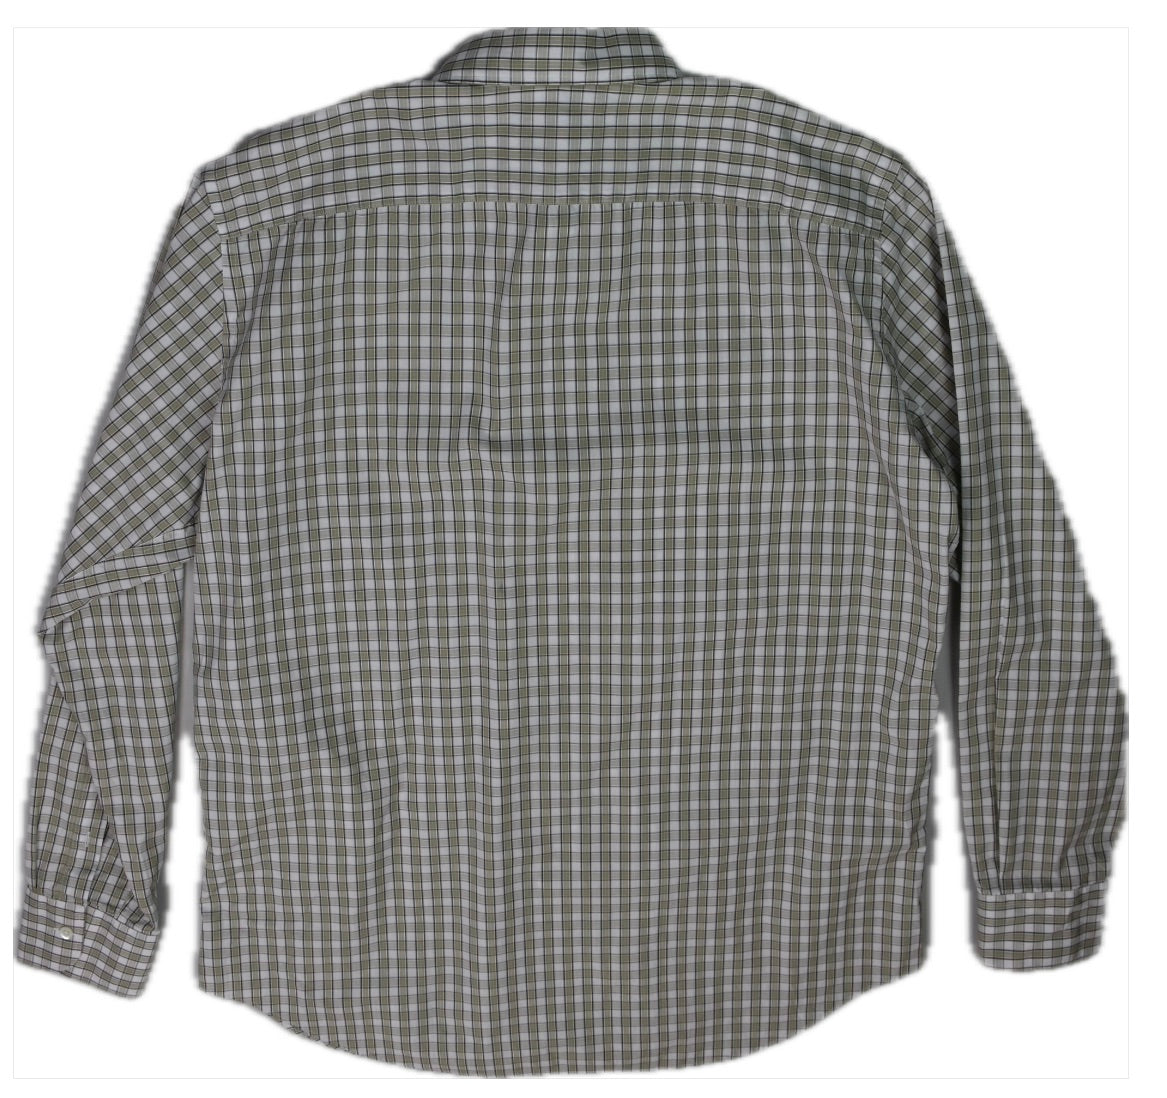 Canali Multi Color Check Modern Fit Cotton Shirt XL NEW $295    GLO2865801L723